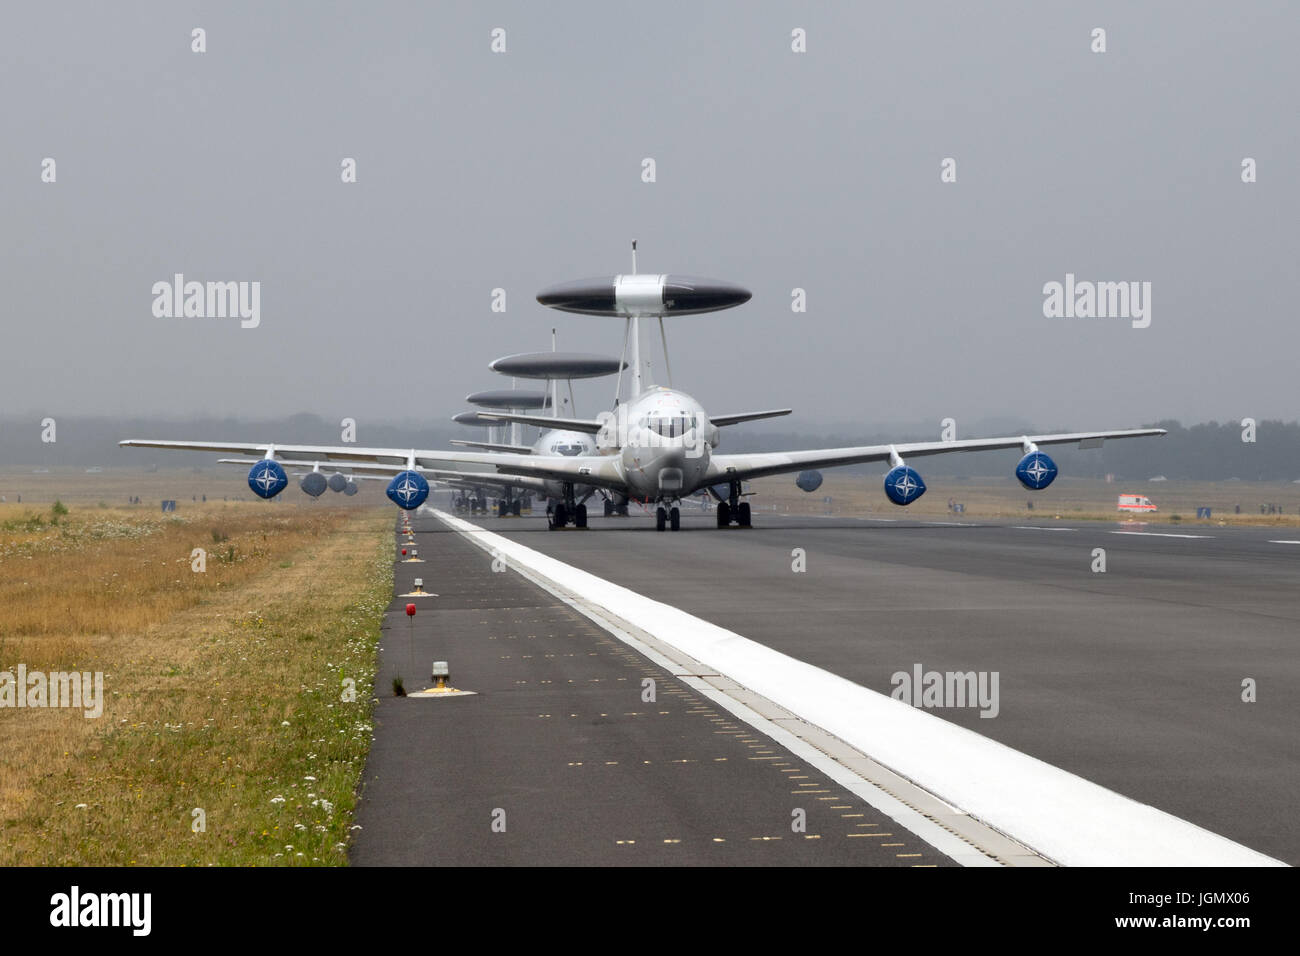 GEILENKIRCHEN, GERMANY - JUL 2, 2017: Row of NATO Boeing E-3 Sentry AWACS radar planes on the runway of Geilenkirchen airbase. Stock Photo